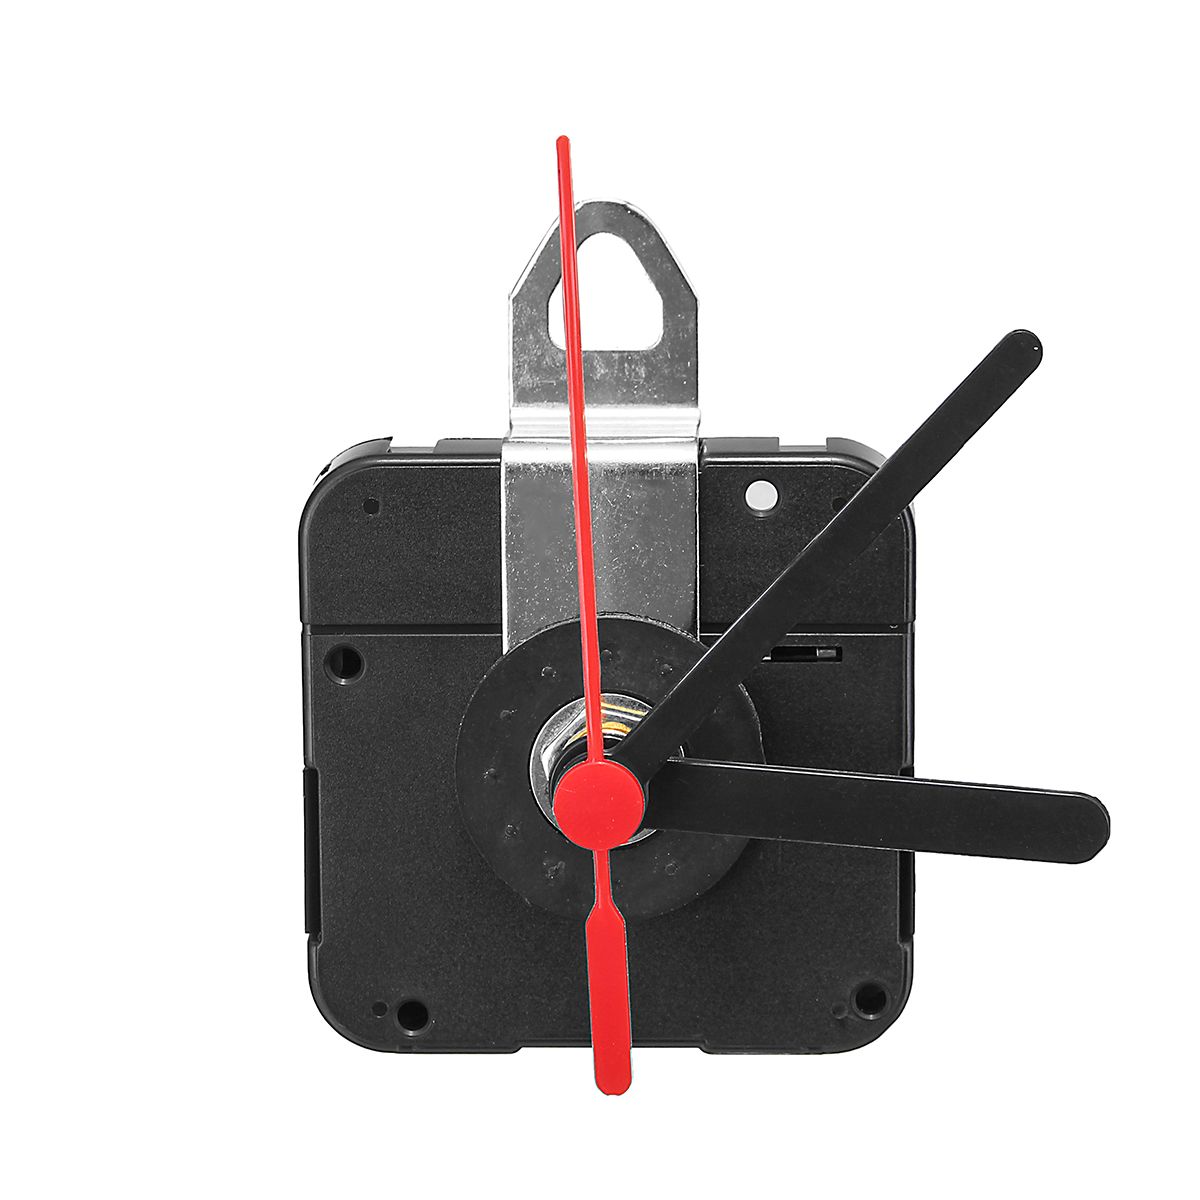 DIY-Quartz-Clock-Movement-Mechanism-Module-Kit-Hour-Minute-Second-with-Metal-Hanger-1333715